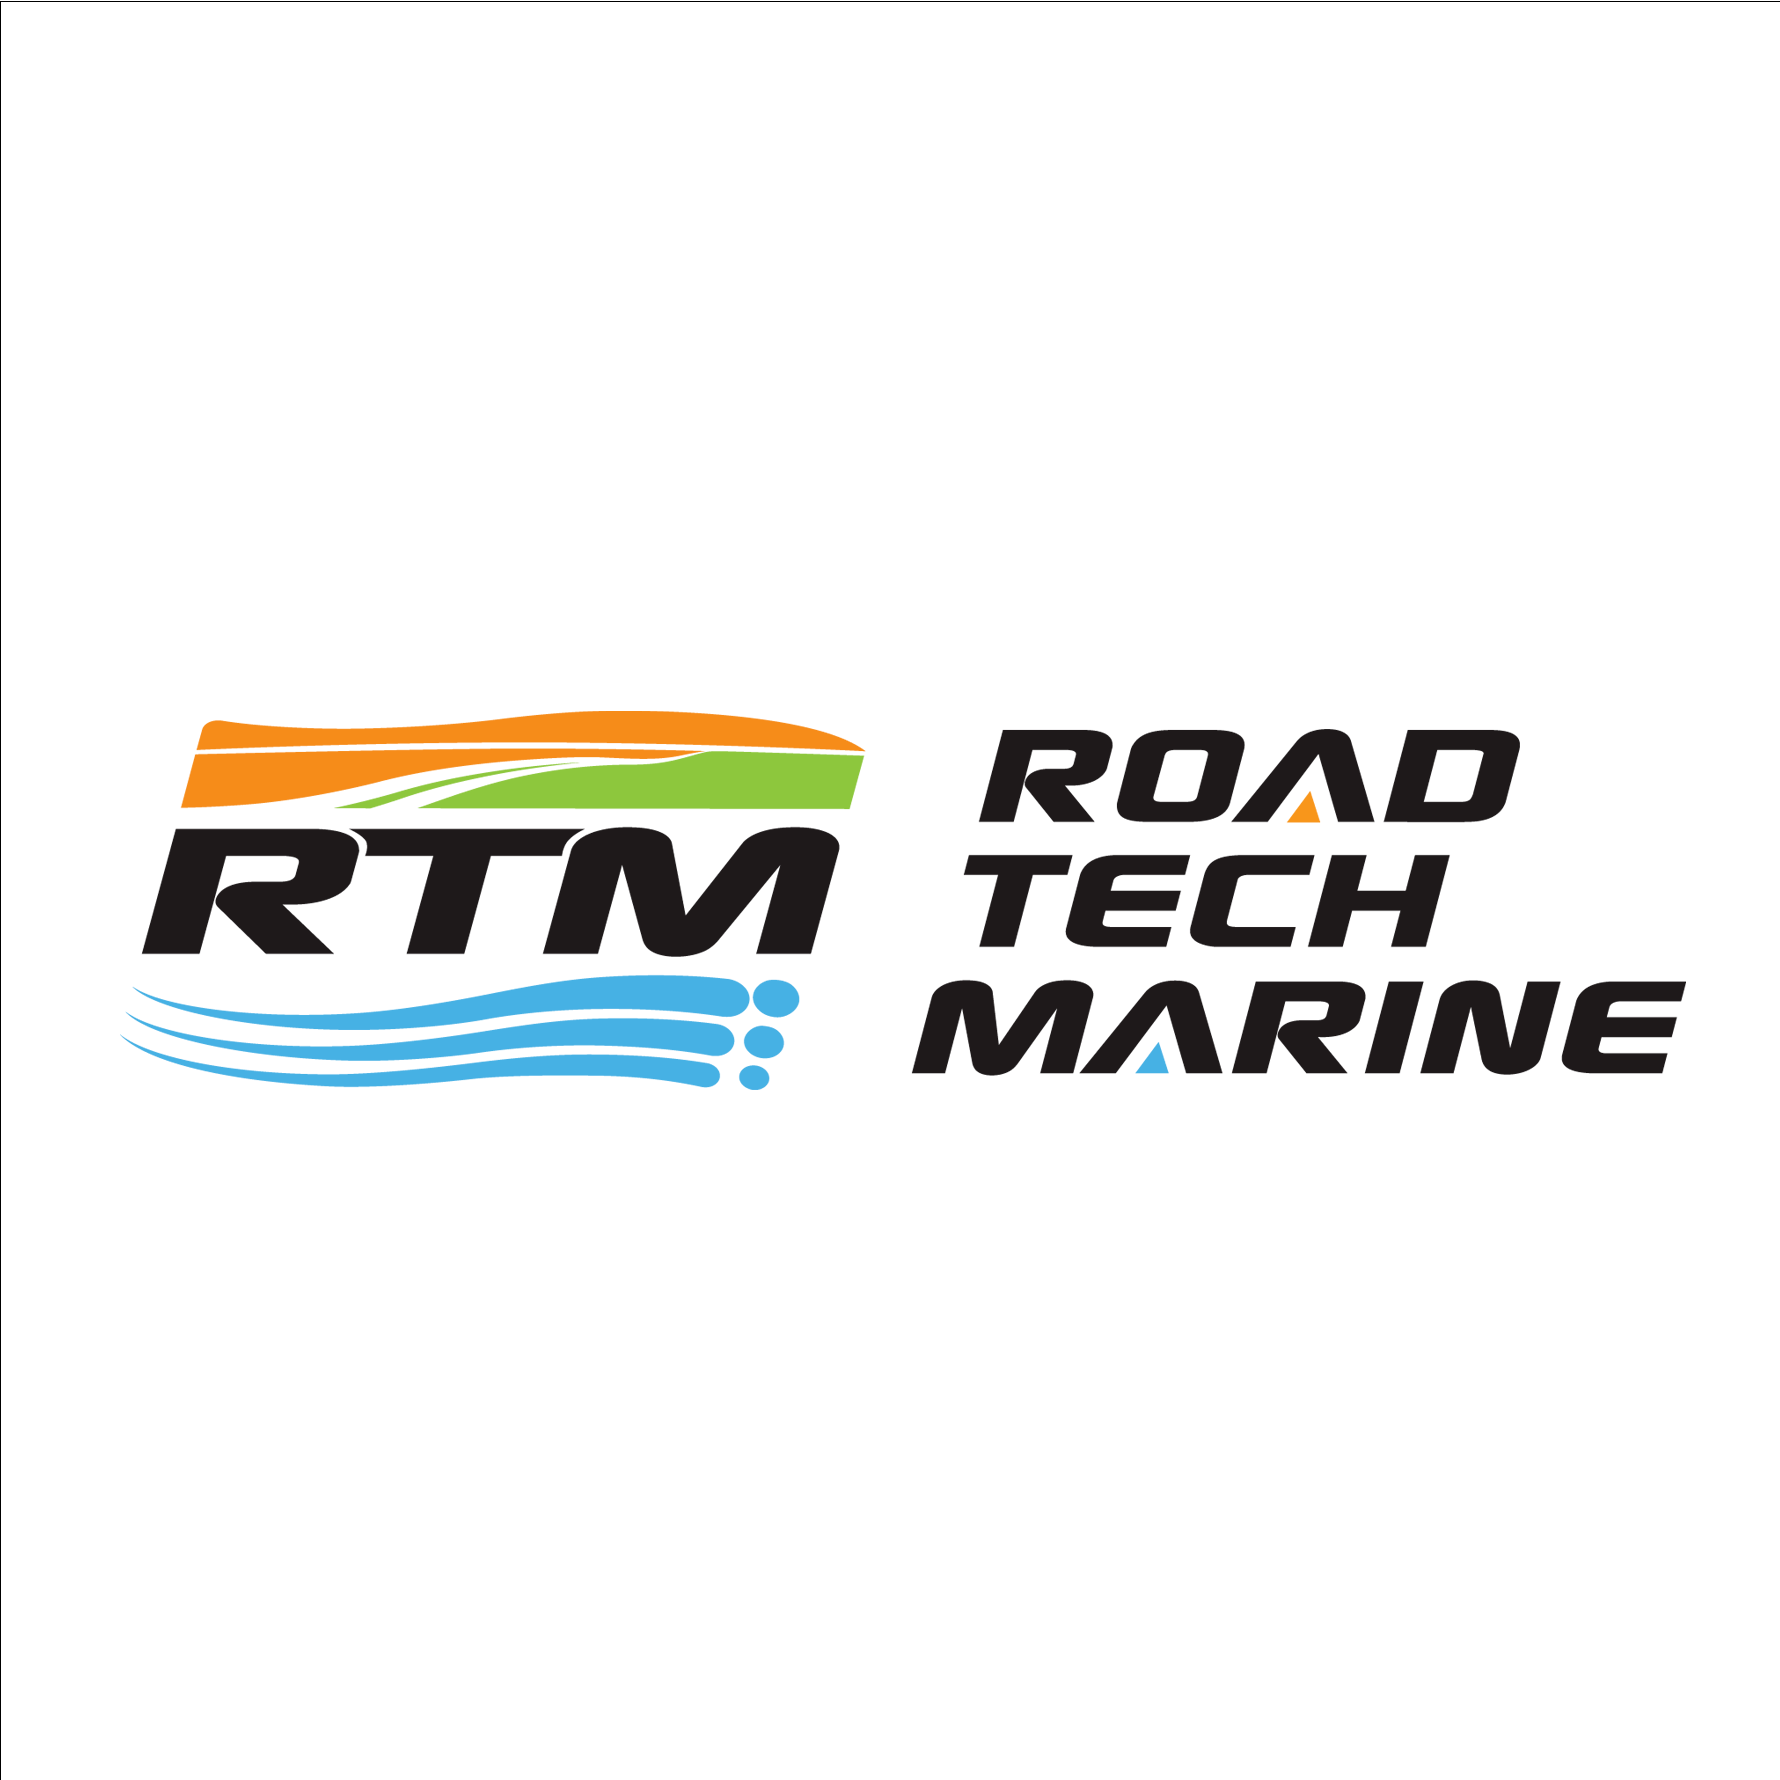 RTM - Road Tech Marine North Lakes - North Lakes, QLD 4509 - (07) 3448 6395 | ShowMeLocal.com